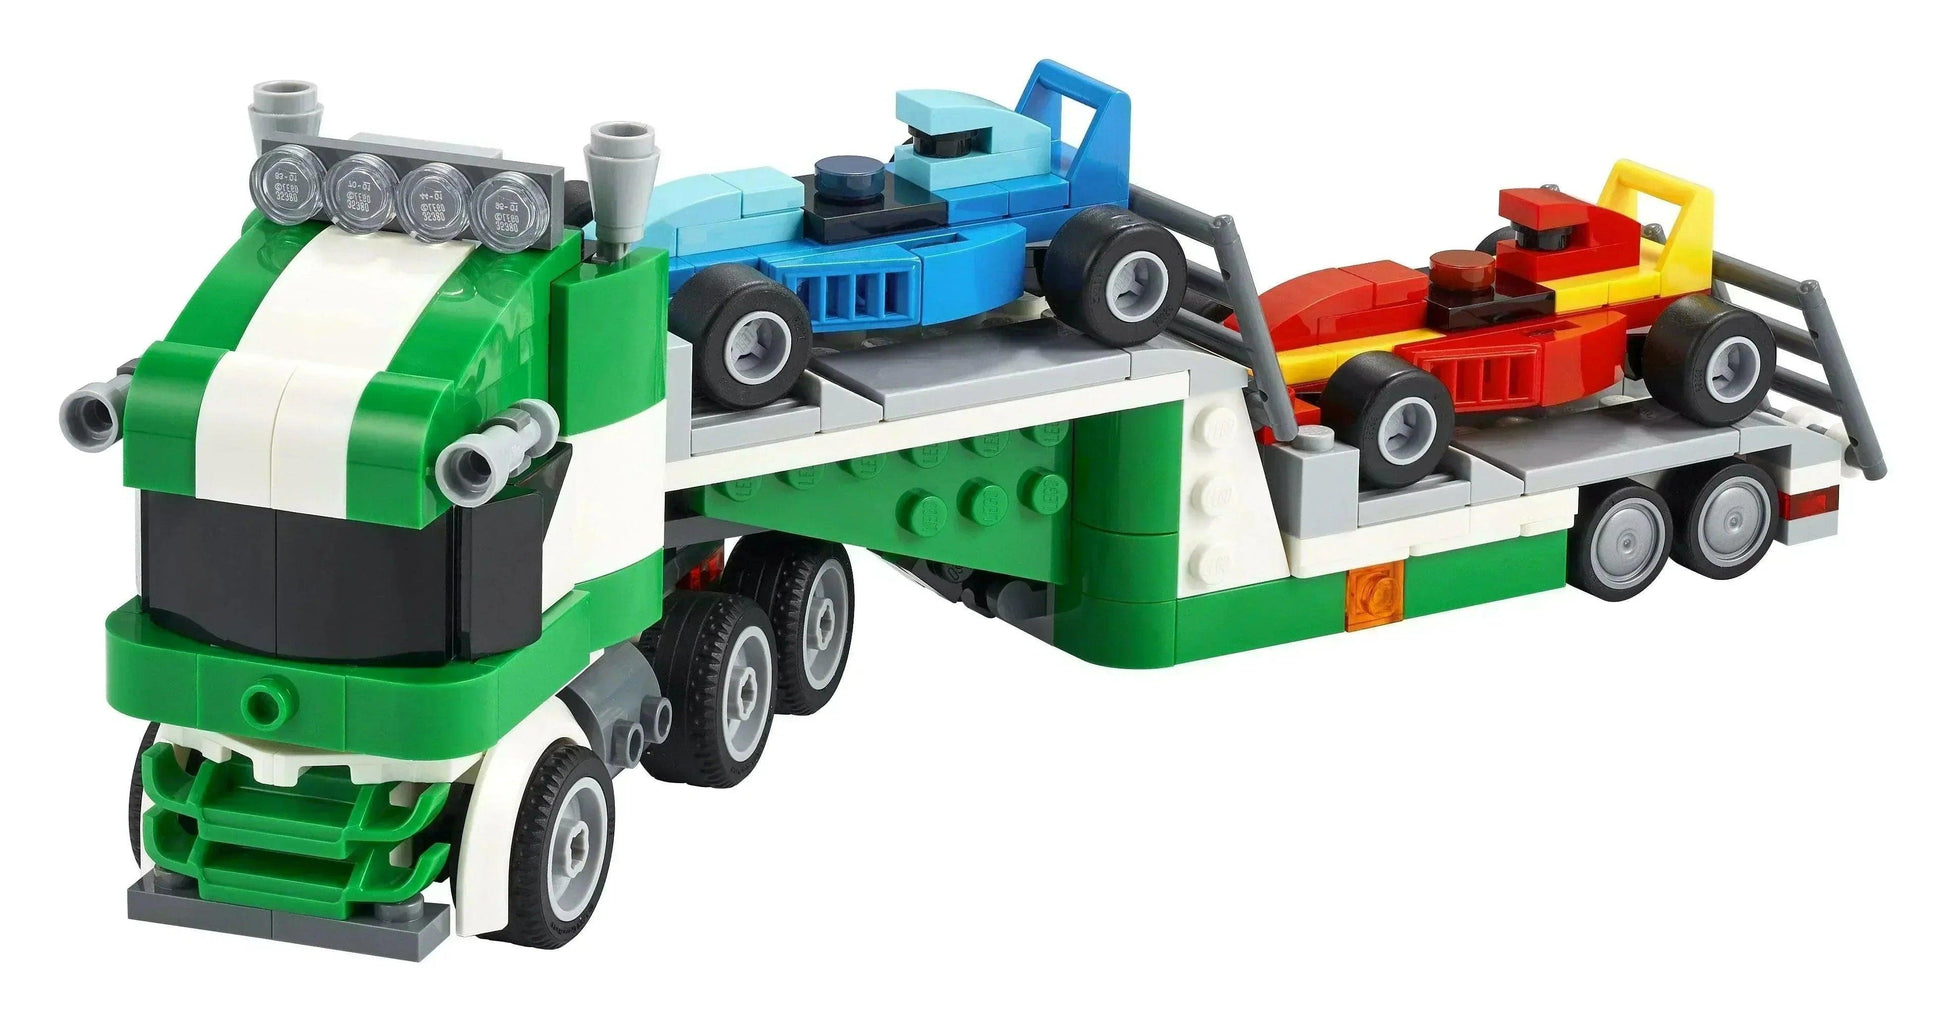 LEGO Racewagen transport vrachtwagen 31113 Creator 3-in-1 LEGO CREATOR @ 2TTOYS LEGO €. 21.24